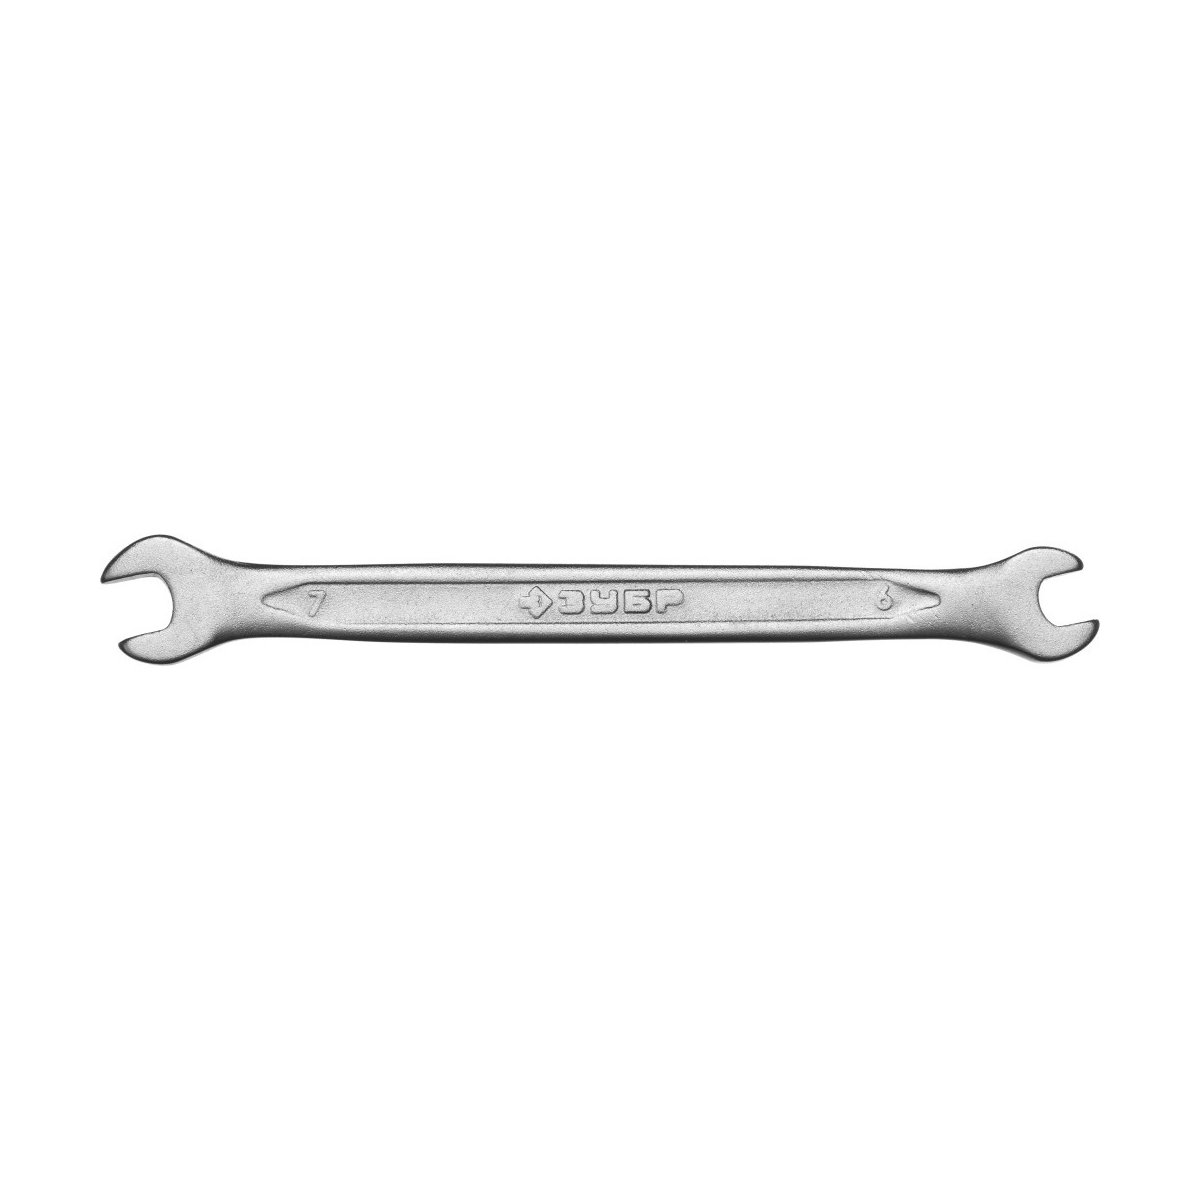 ЗУБР 6х7 мм, Cr-V сталь, хромированный, гаечный ключ рожковый 27010-06-07